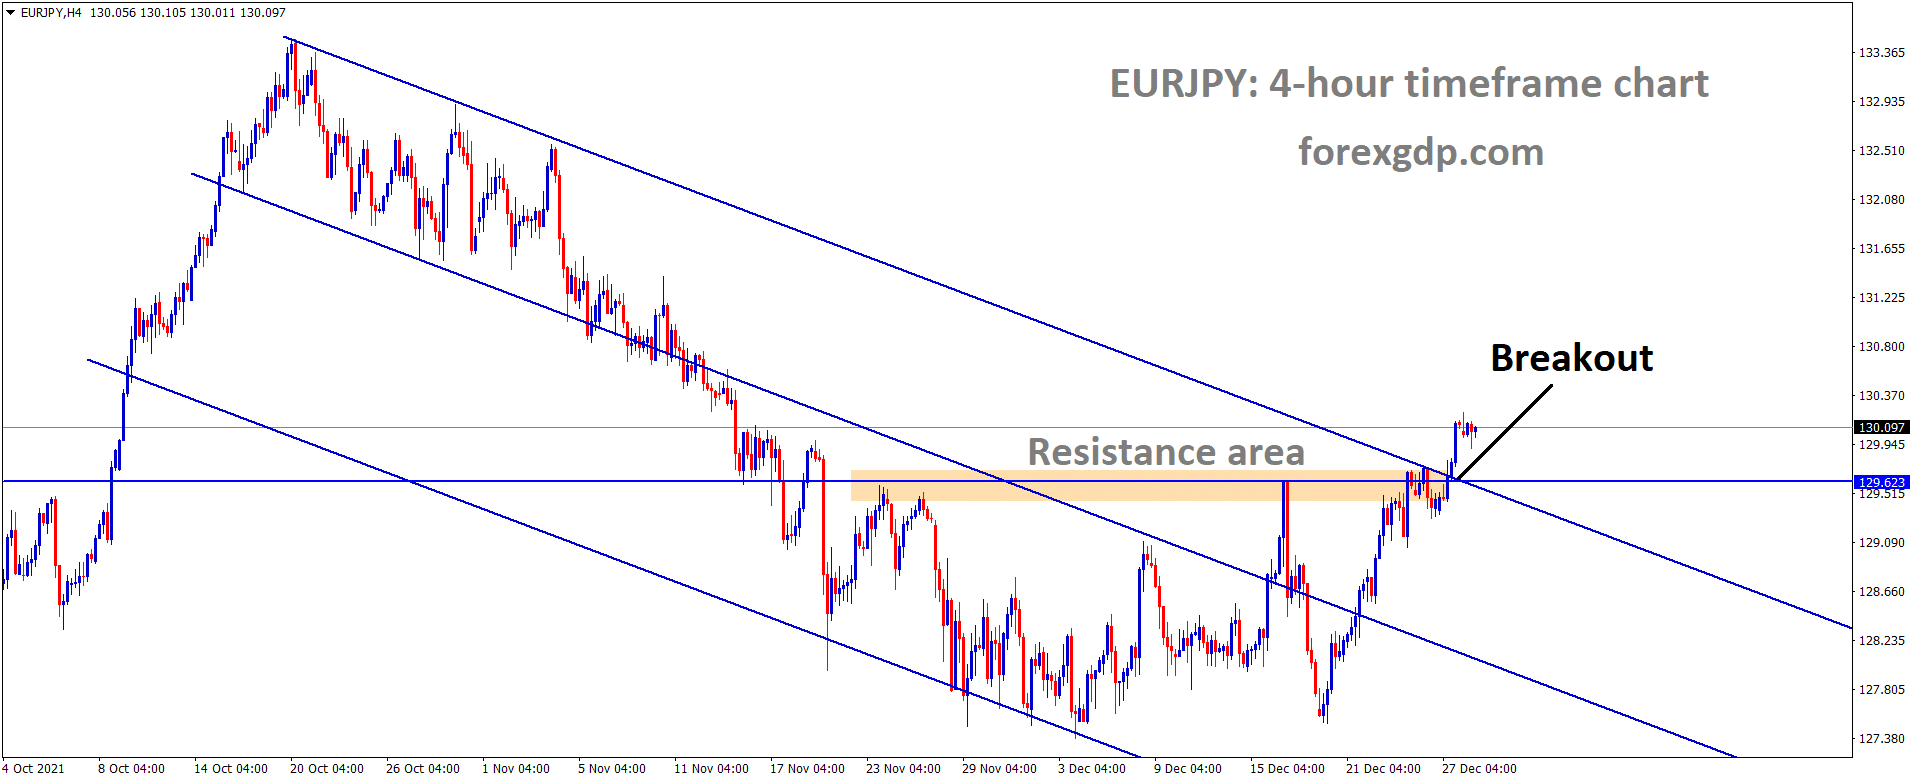 EURJPY has broken the Descending channel and Horizontal resistance area.